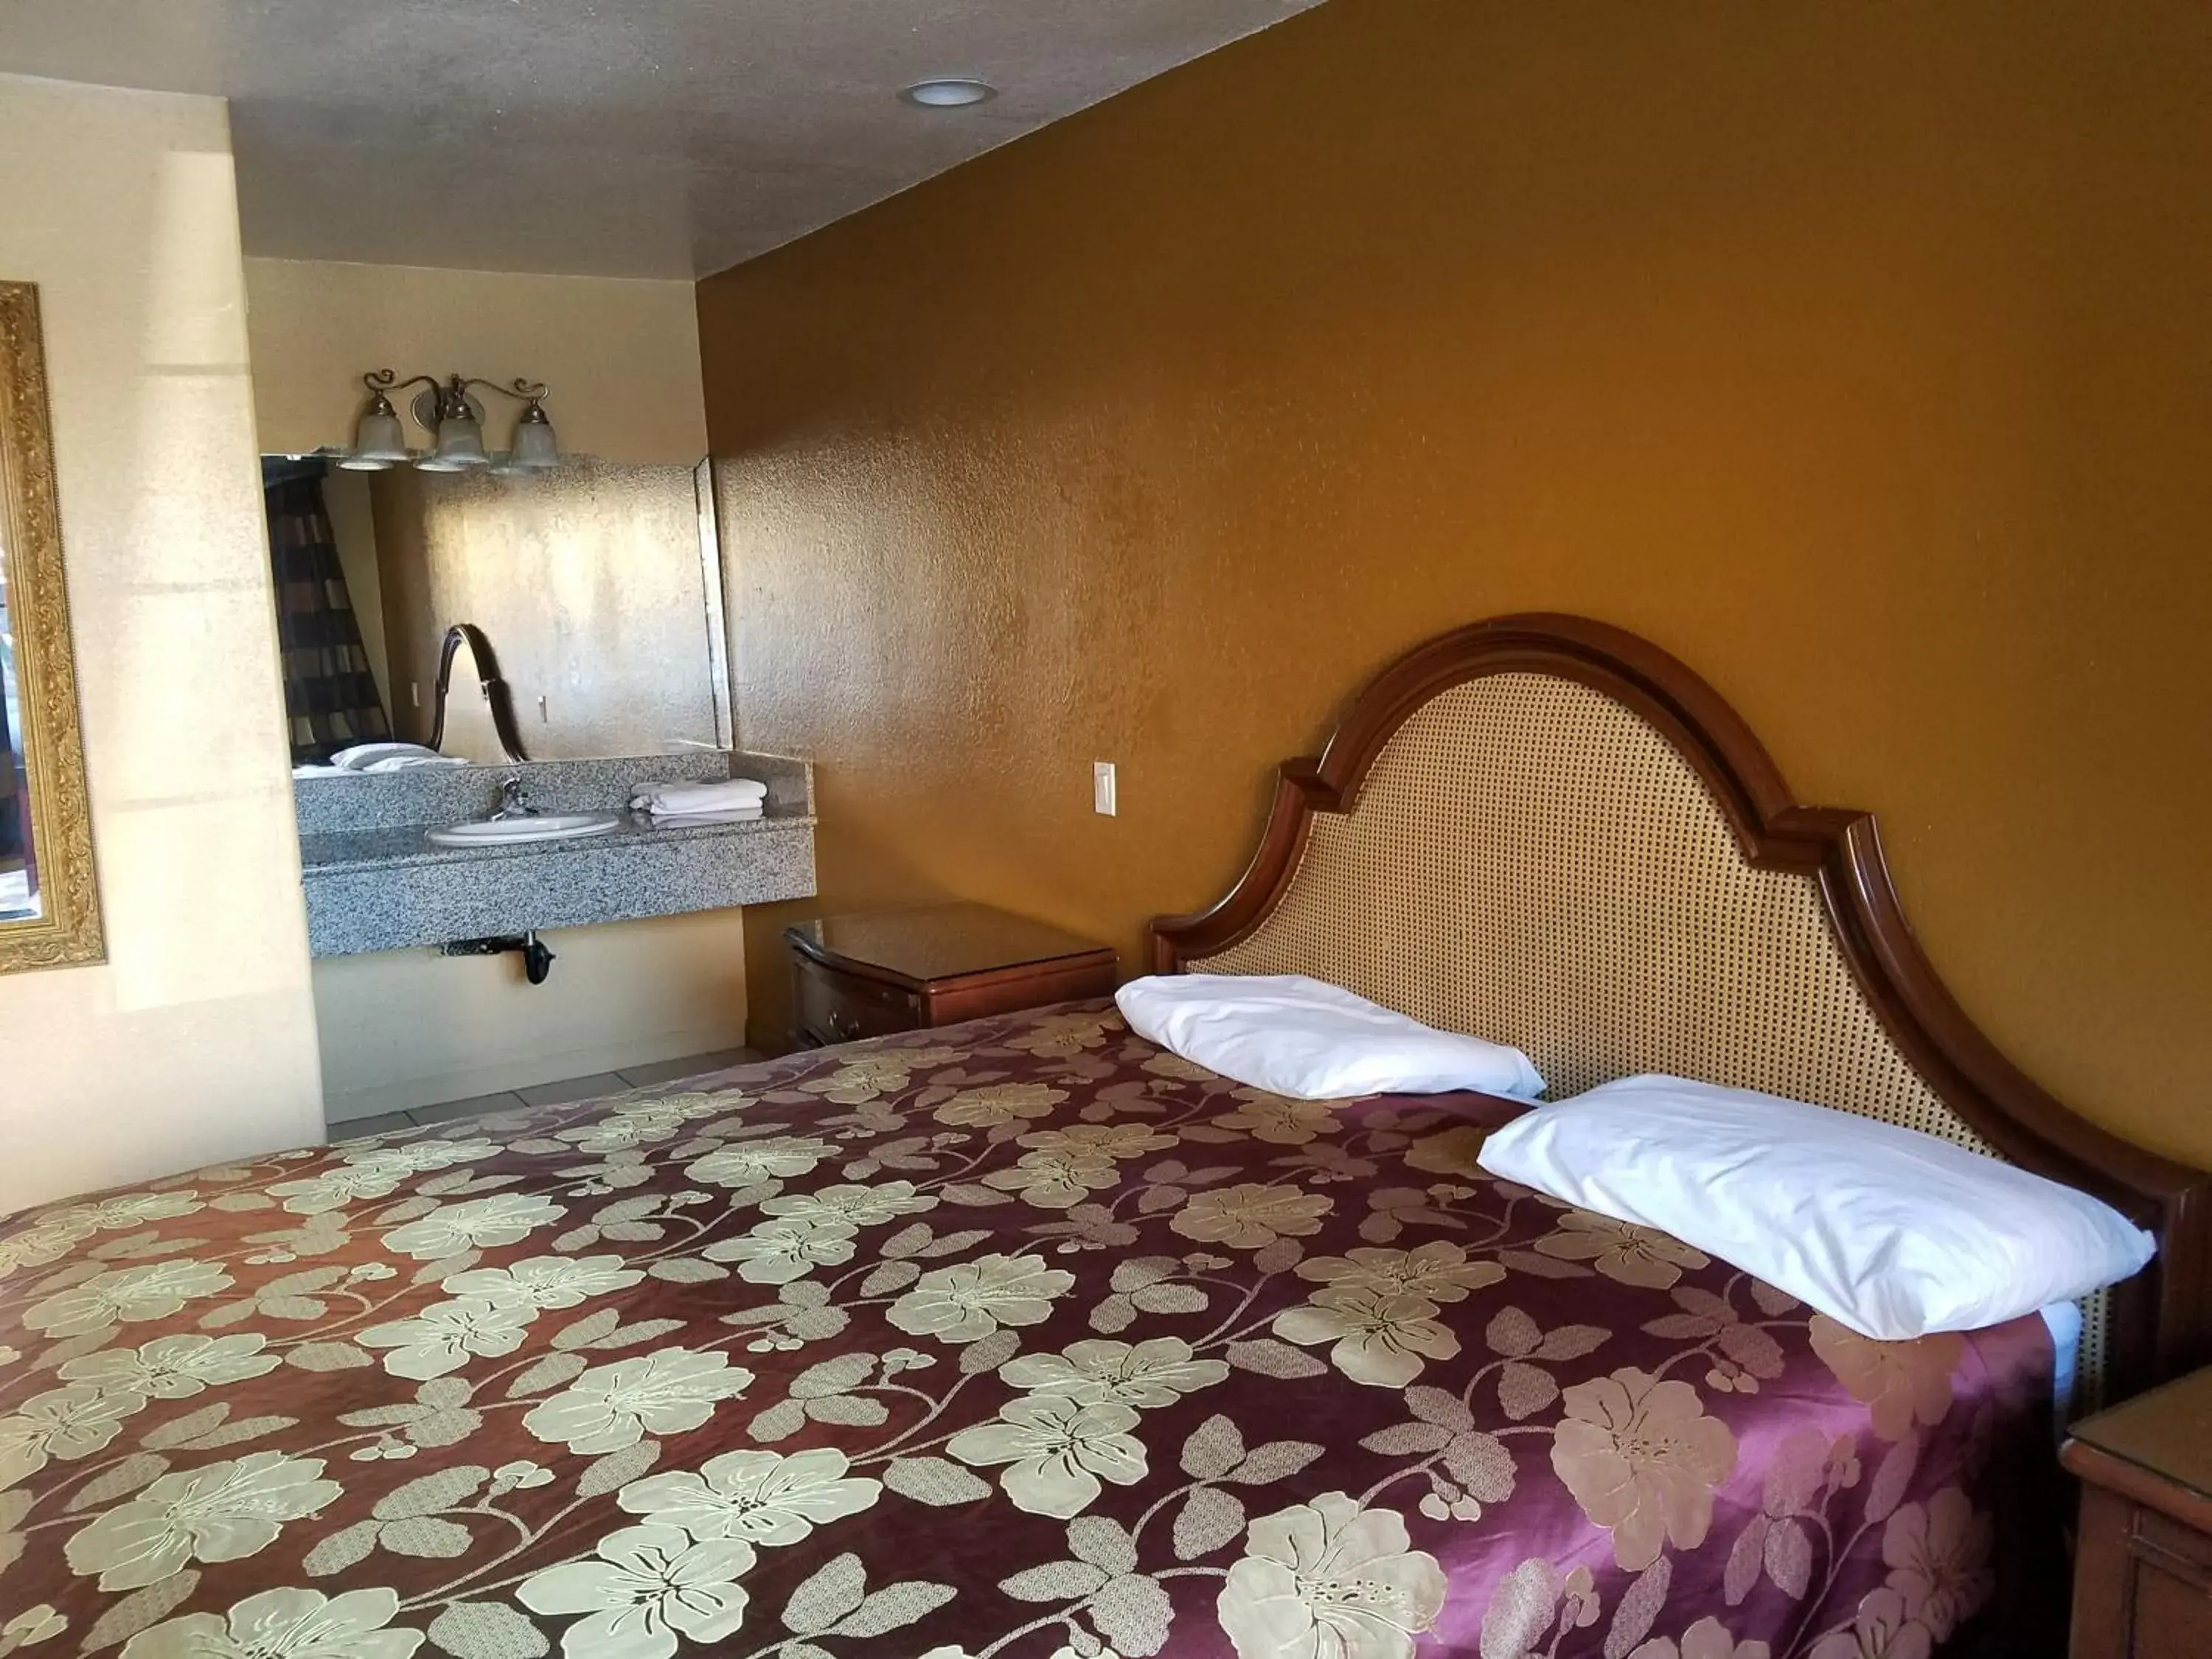 Bed, Room Photo in Central Inn Motel